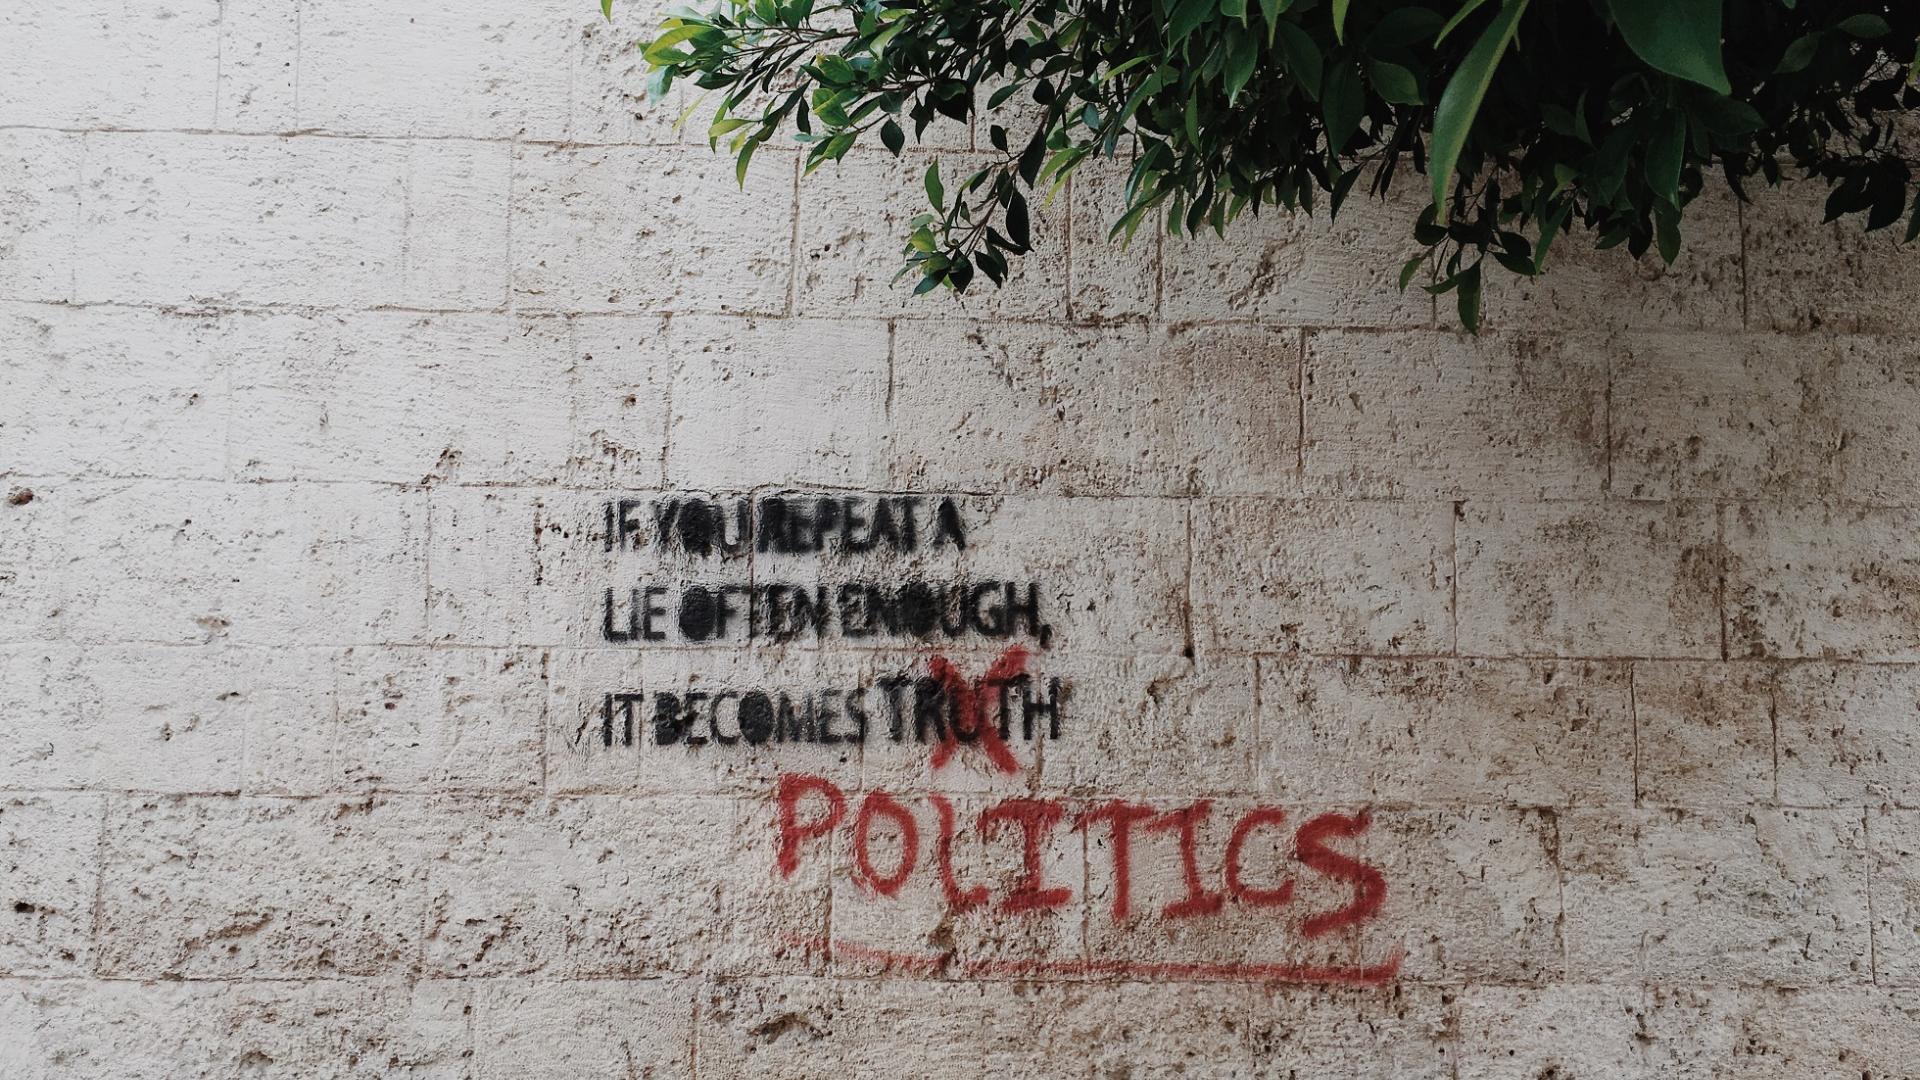 Graffiti: If you repeat a lie often enough, it becomes politics